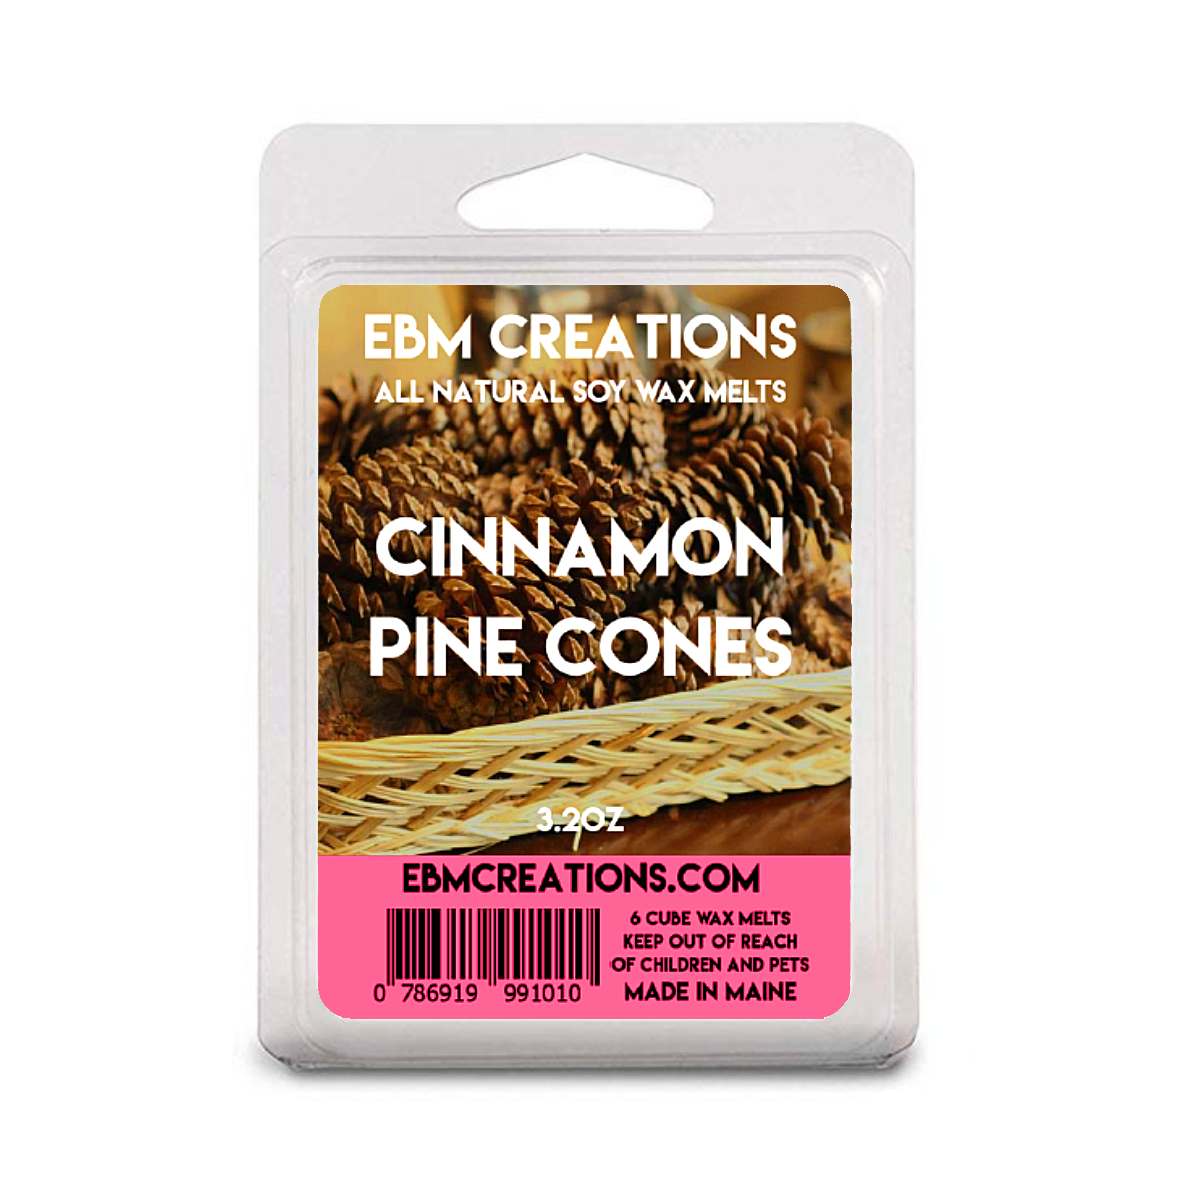 Cinnamon Pine Cones - 3.2 oz Clamshell